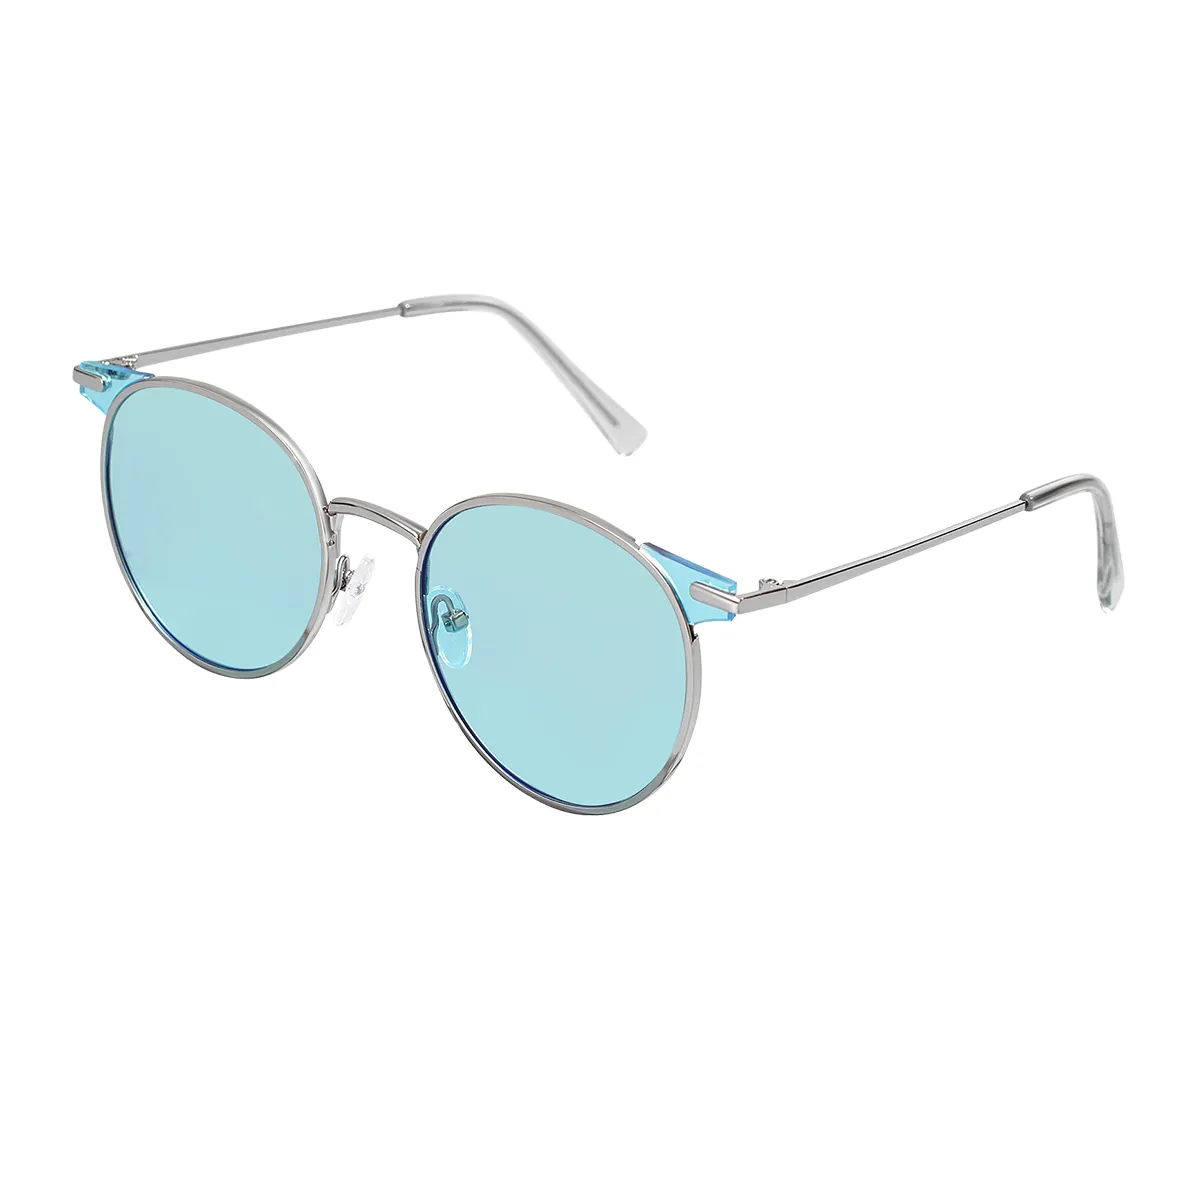 Pruett - Round Silver Sunglasses for Women